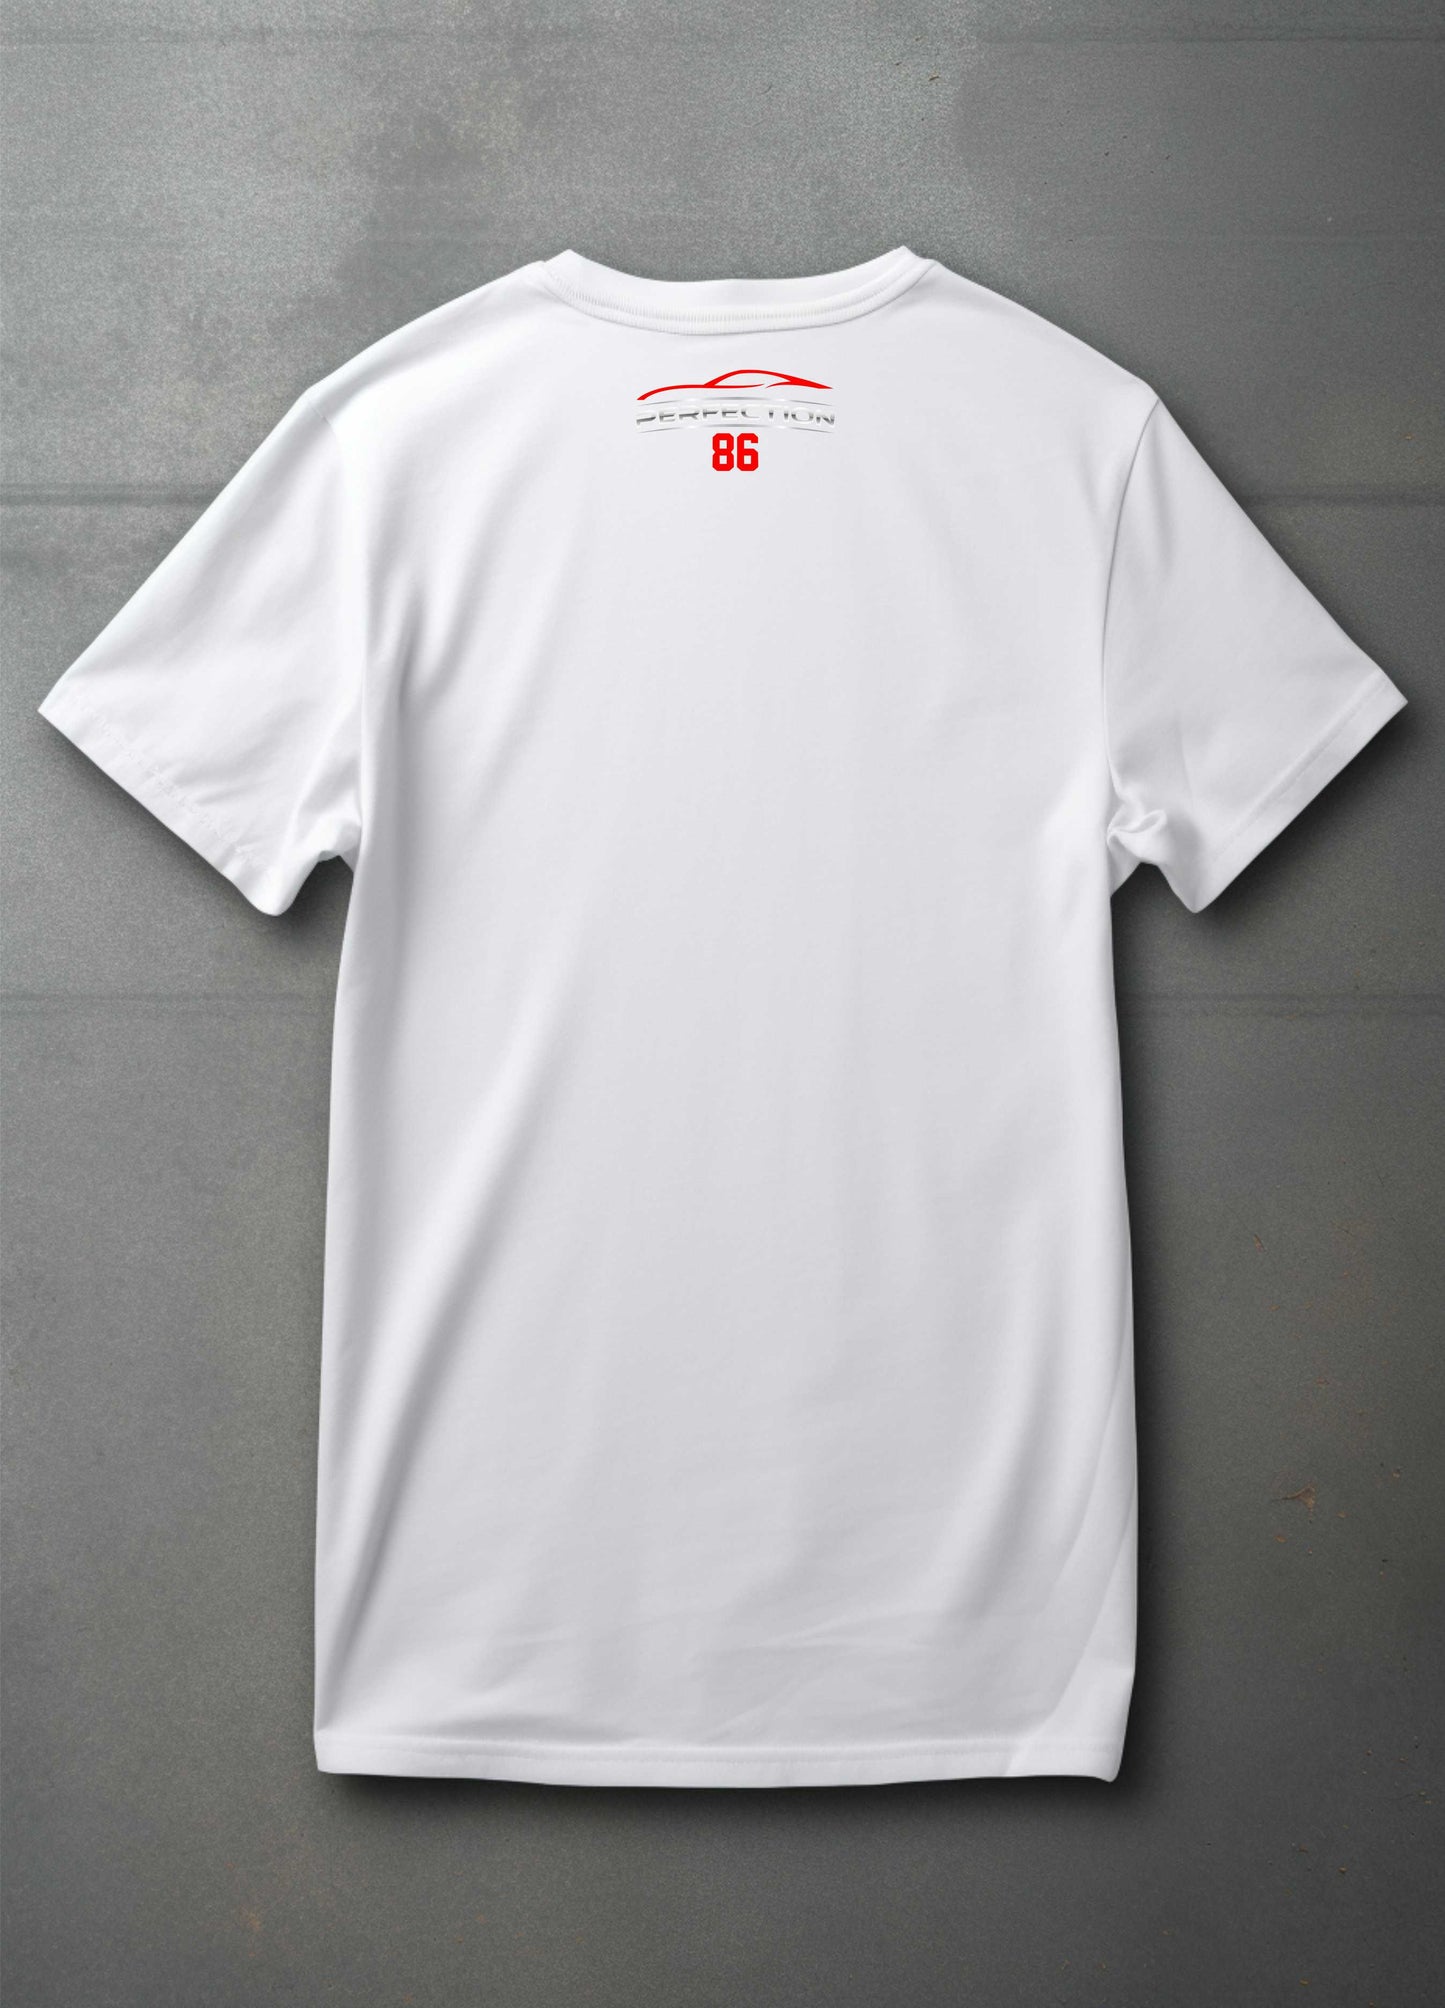 ''Perfection86 Skyline No.1 '' Cotton T-Shirt